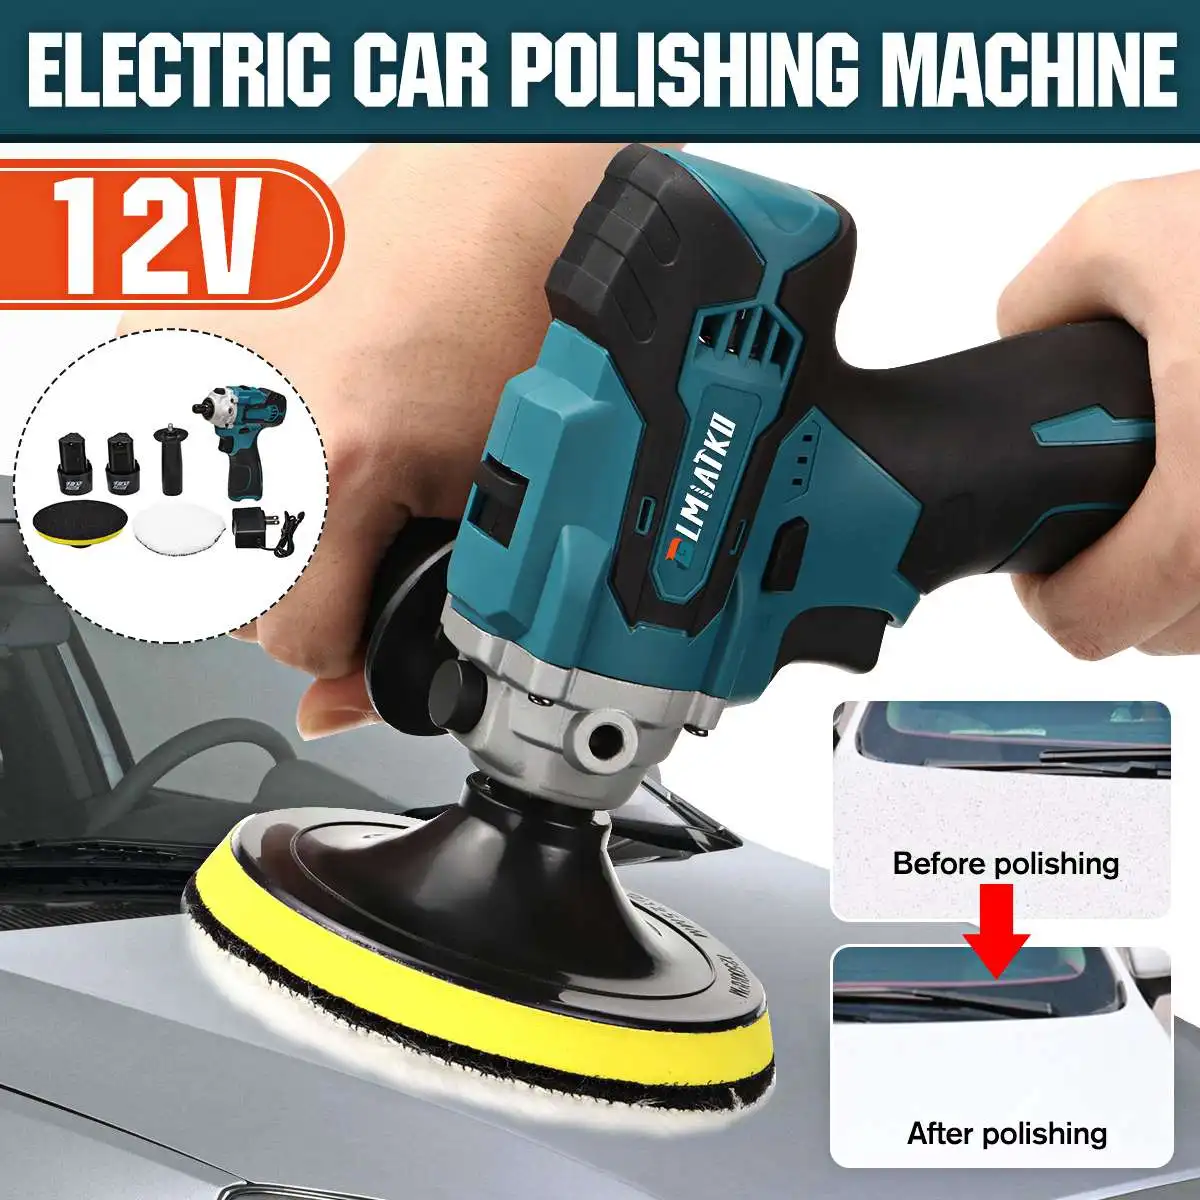 

BLMIATKO 12V 73mm Electric Car Polisher Machine Auto Polishing Sander Buffing Sanding Waxing Tools Car Accessories Power Tools